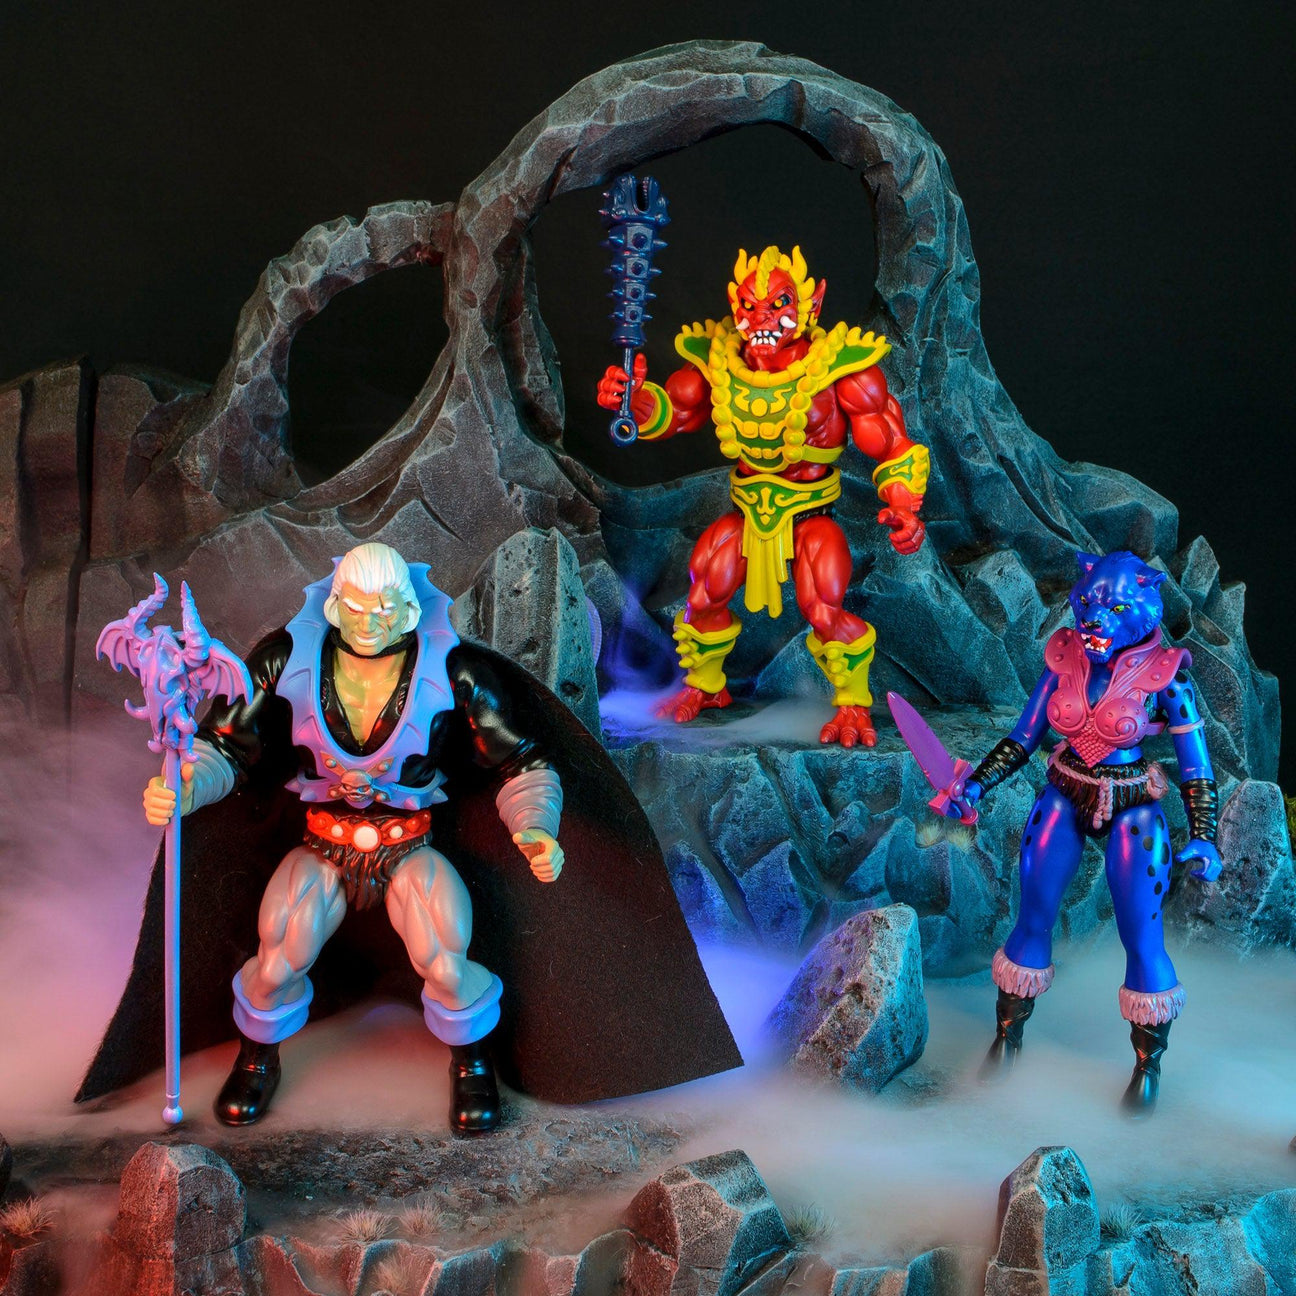 Legends of Dragonore: The Beginning - 6 + 1 Figuren BAF-Set-Actionfiguren-Formo Toys-Mighty Underground